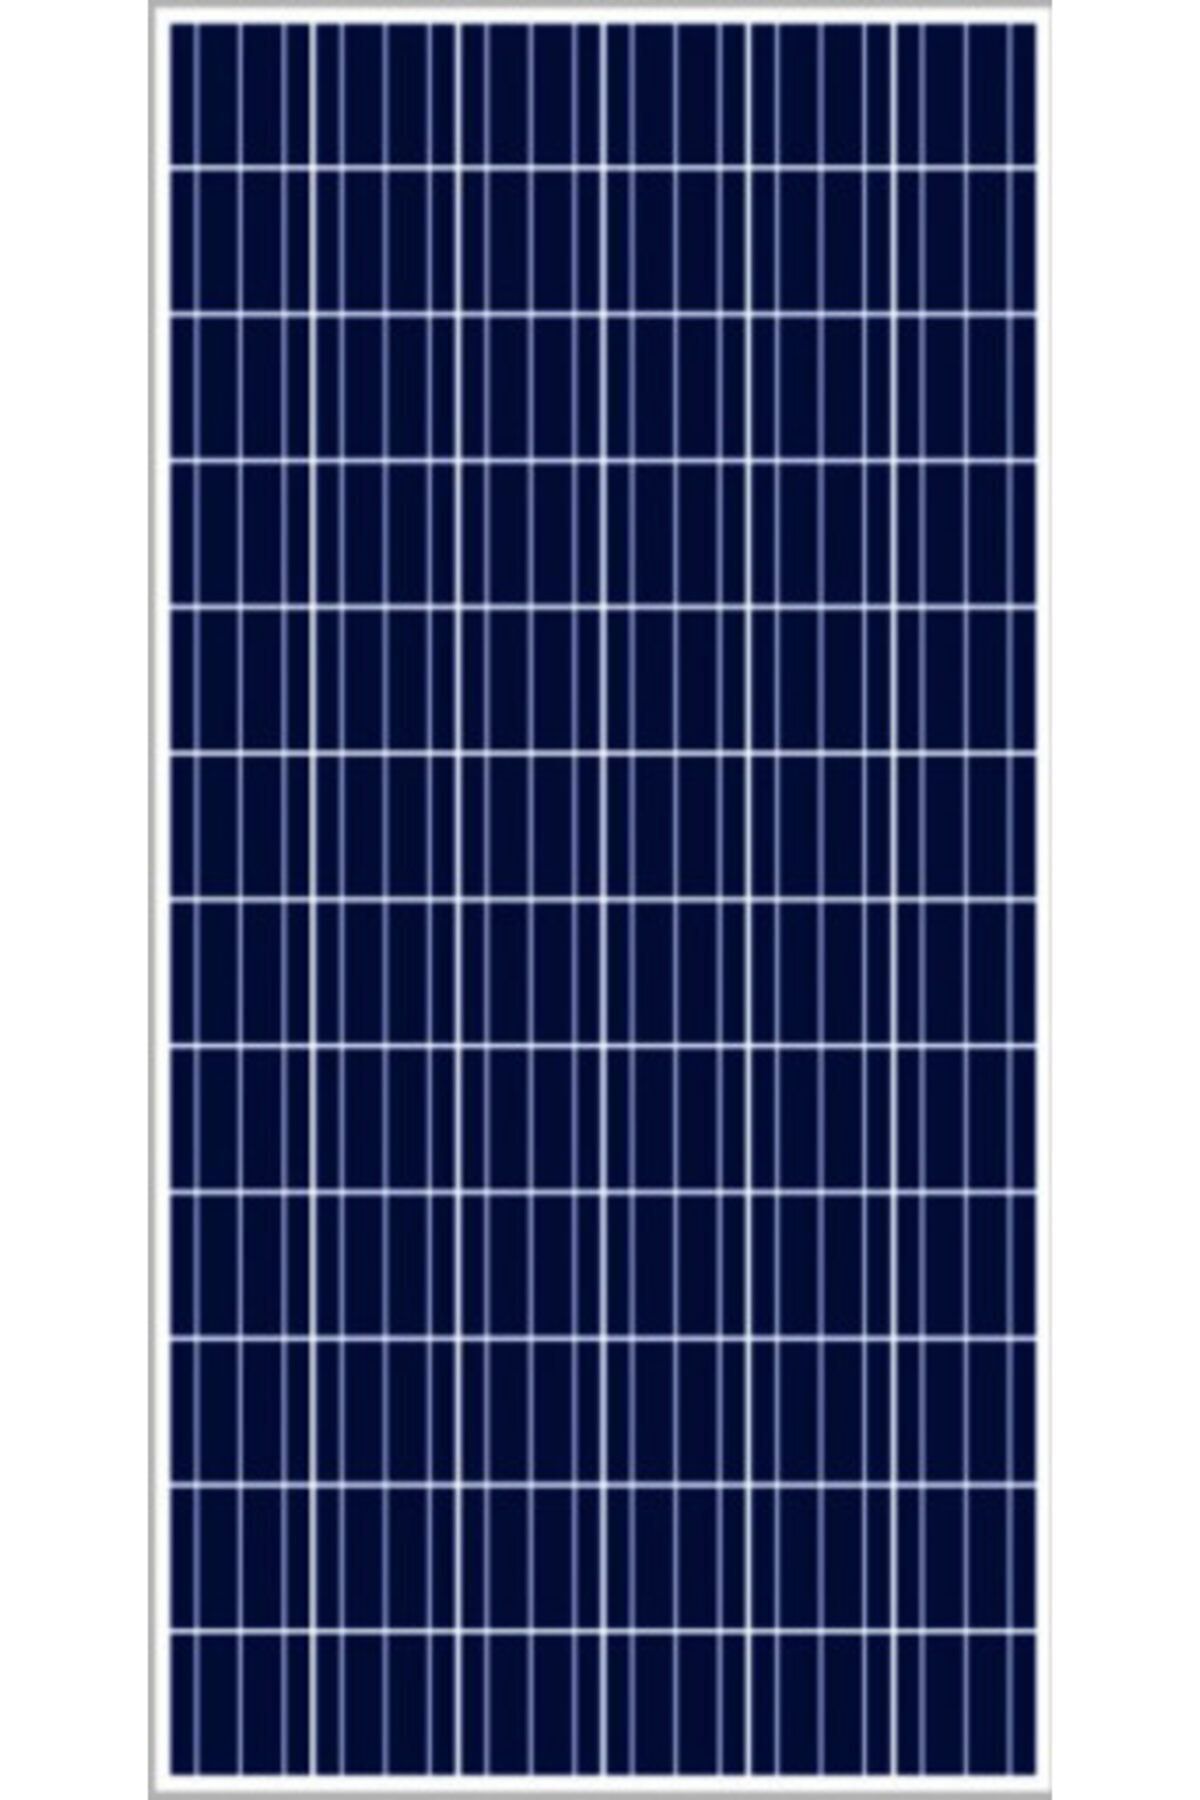 Lexron 170 Watt Güneş Paneli